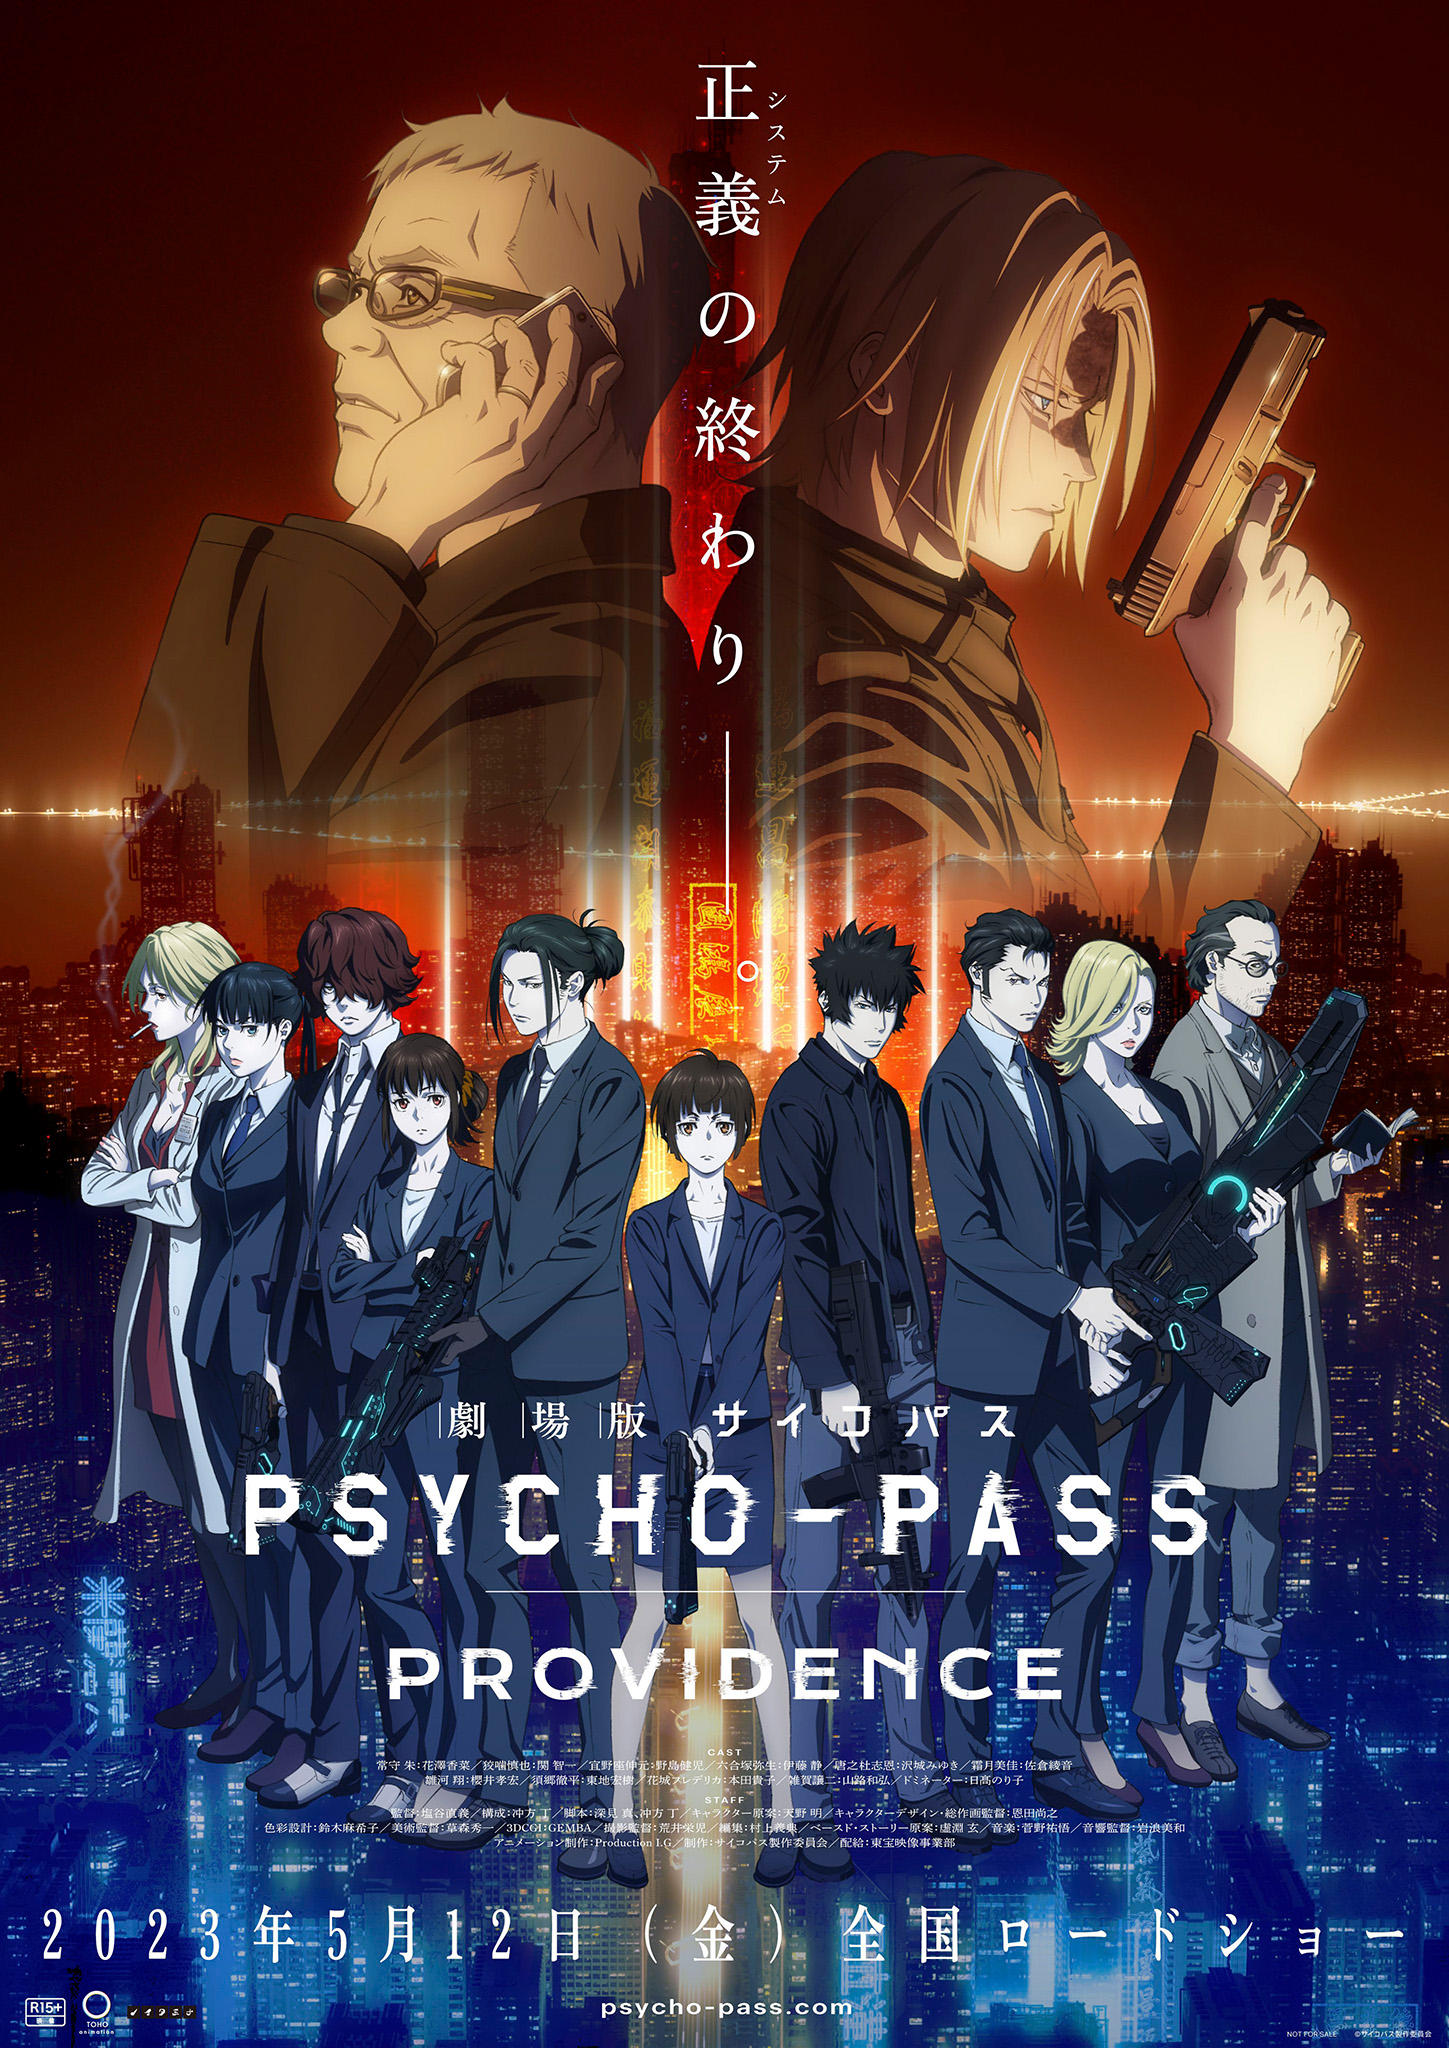 PSYCHO-PASS PROVIDENCE anime teaser visual